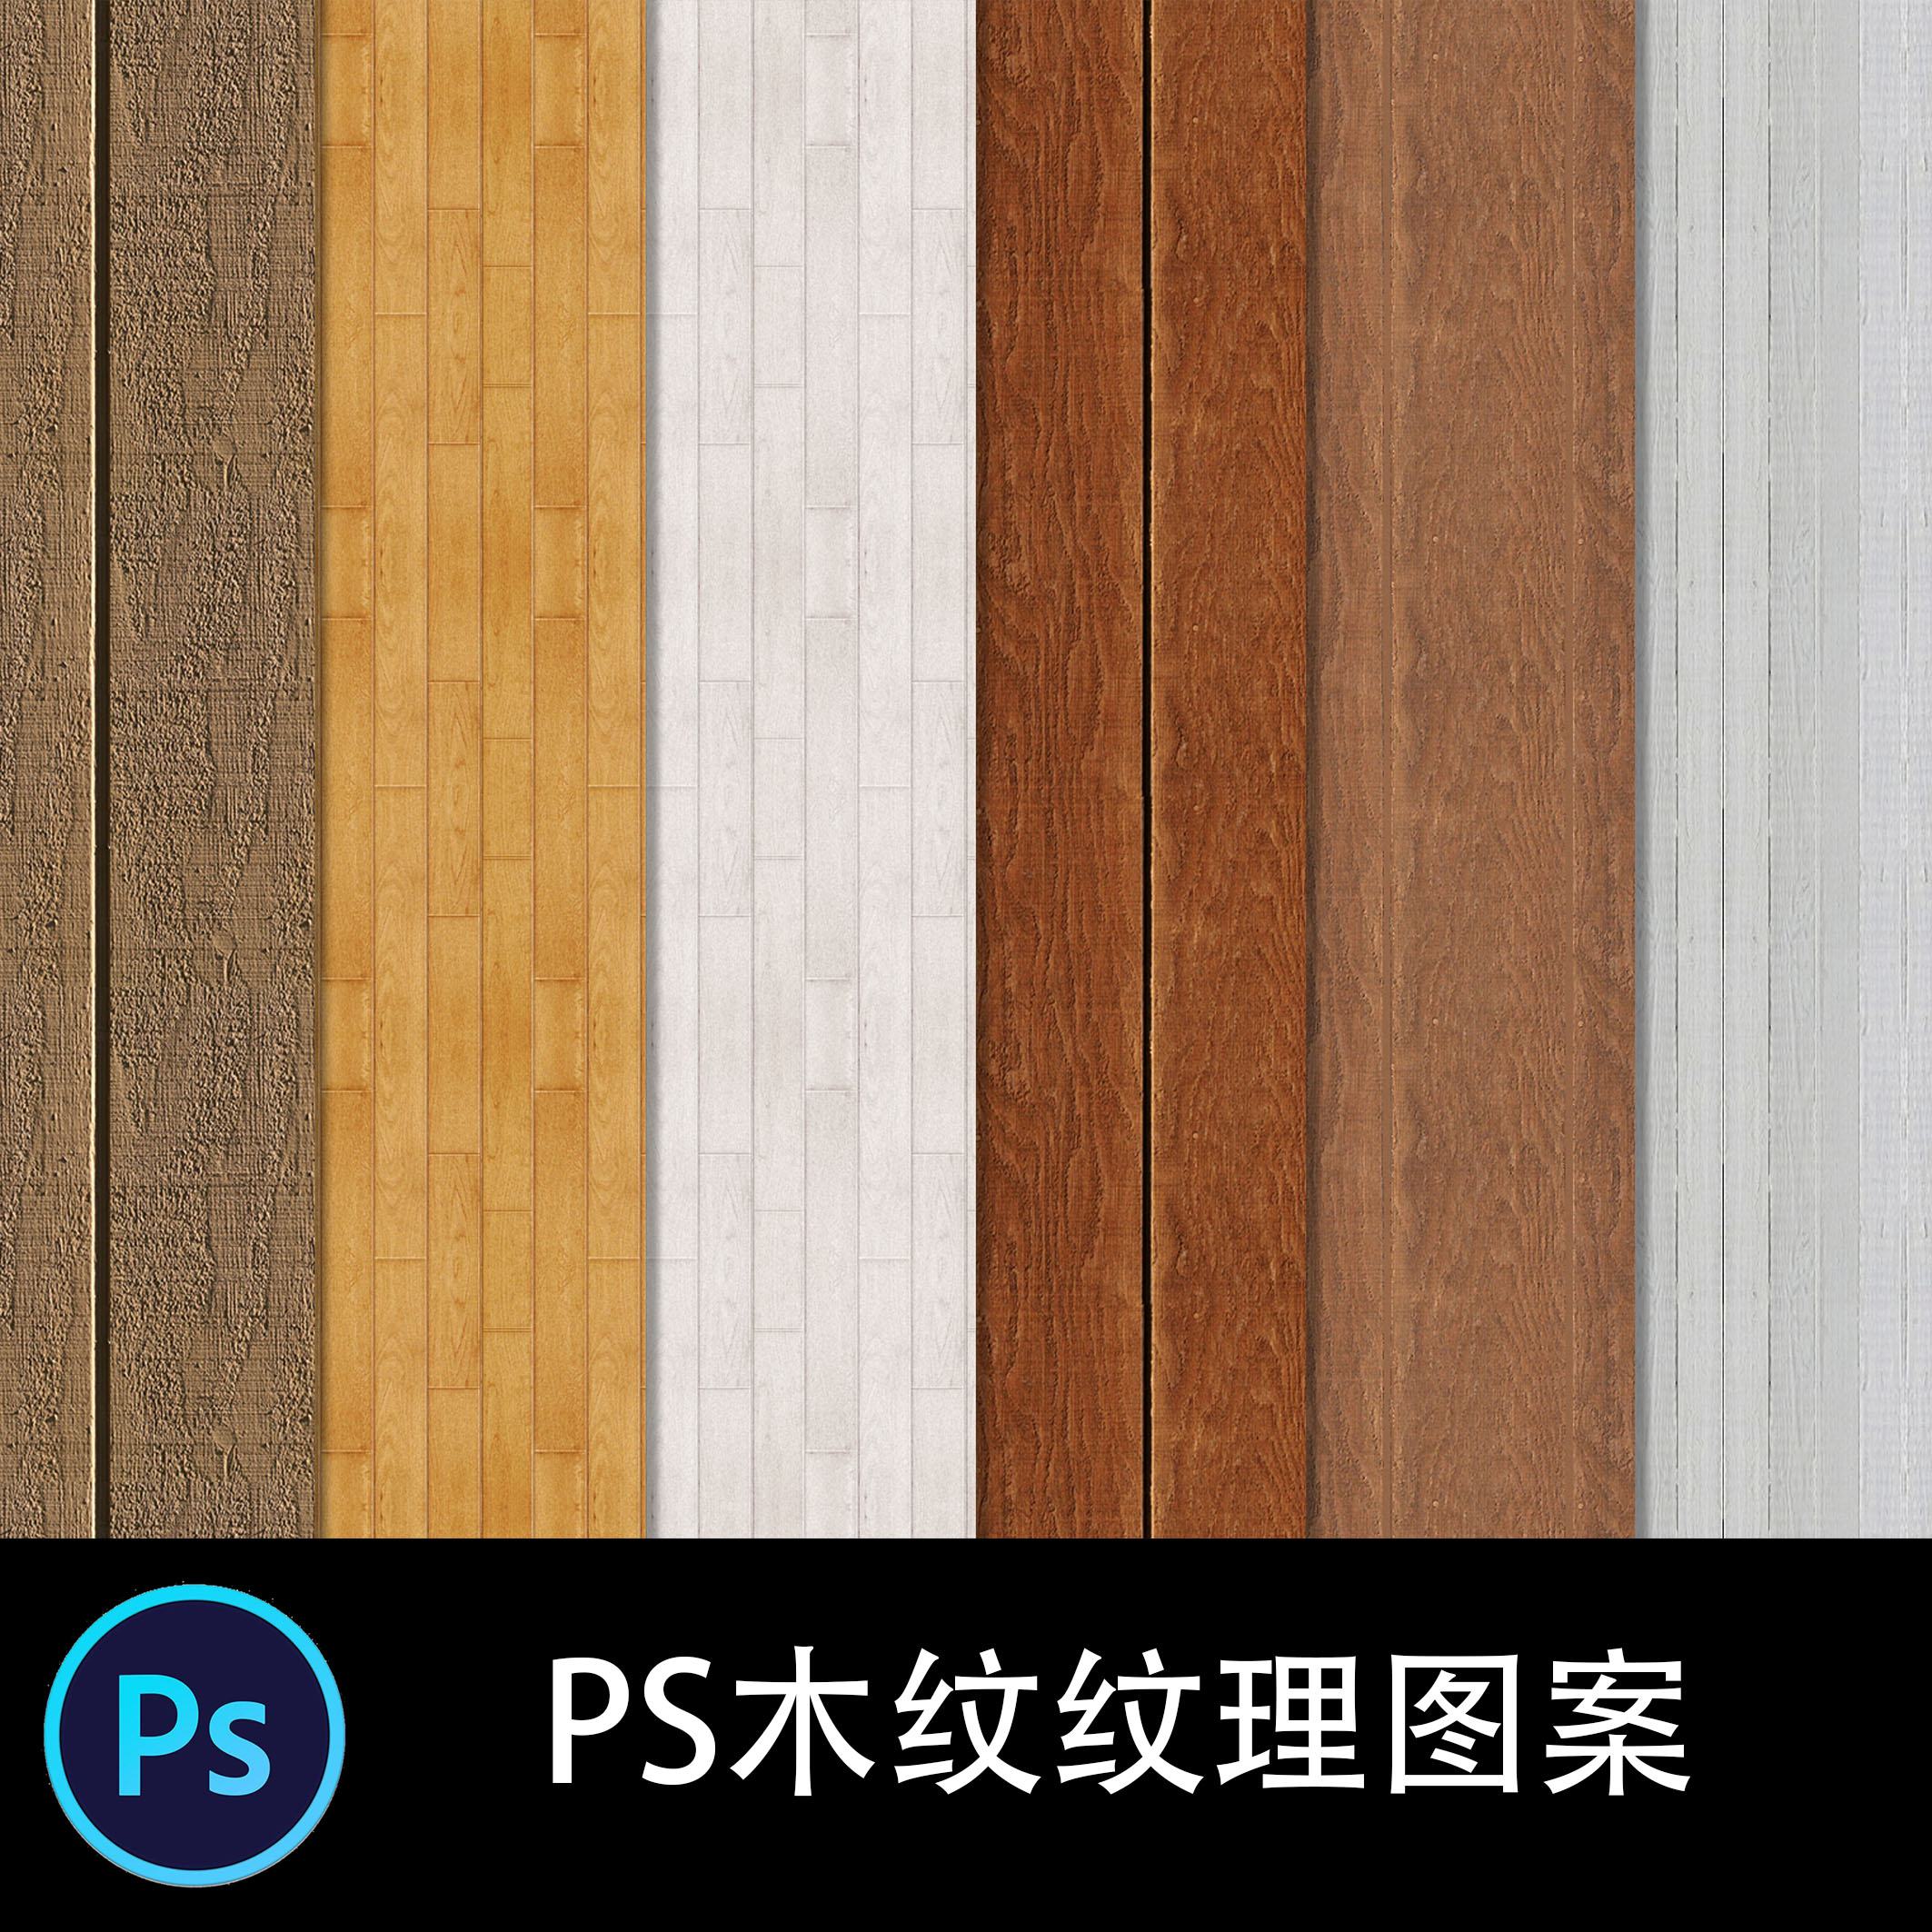 PS无缝图案 百款木质木板地板木纹理PAT无缝填充印花贴图底纹素材